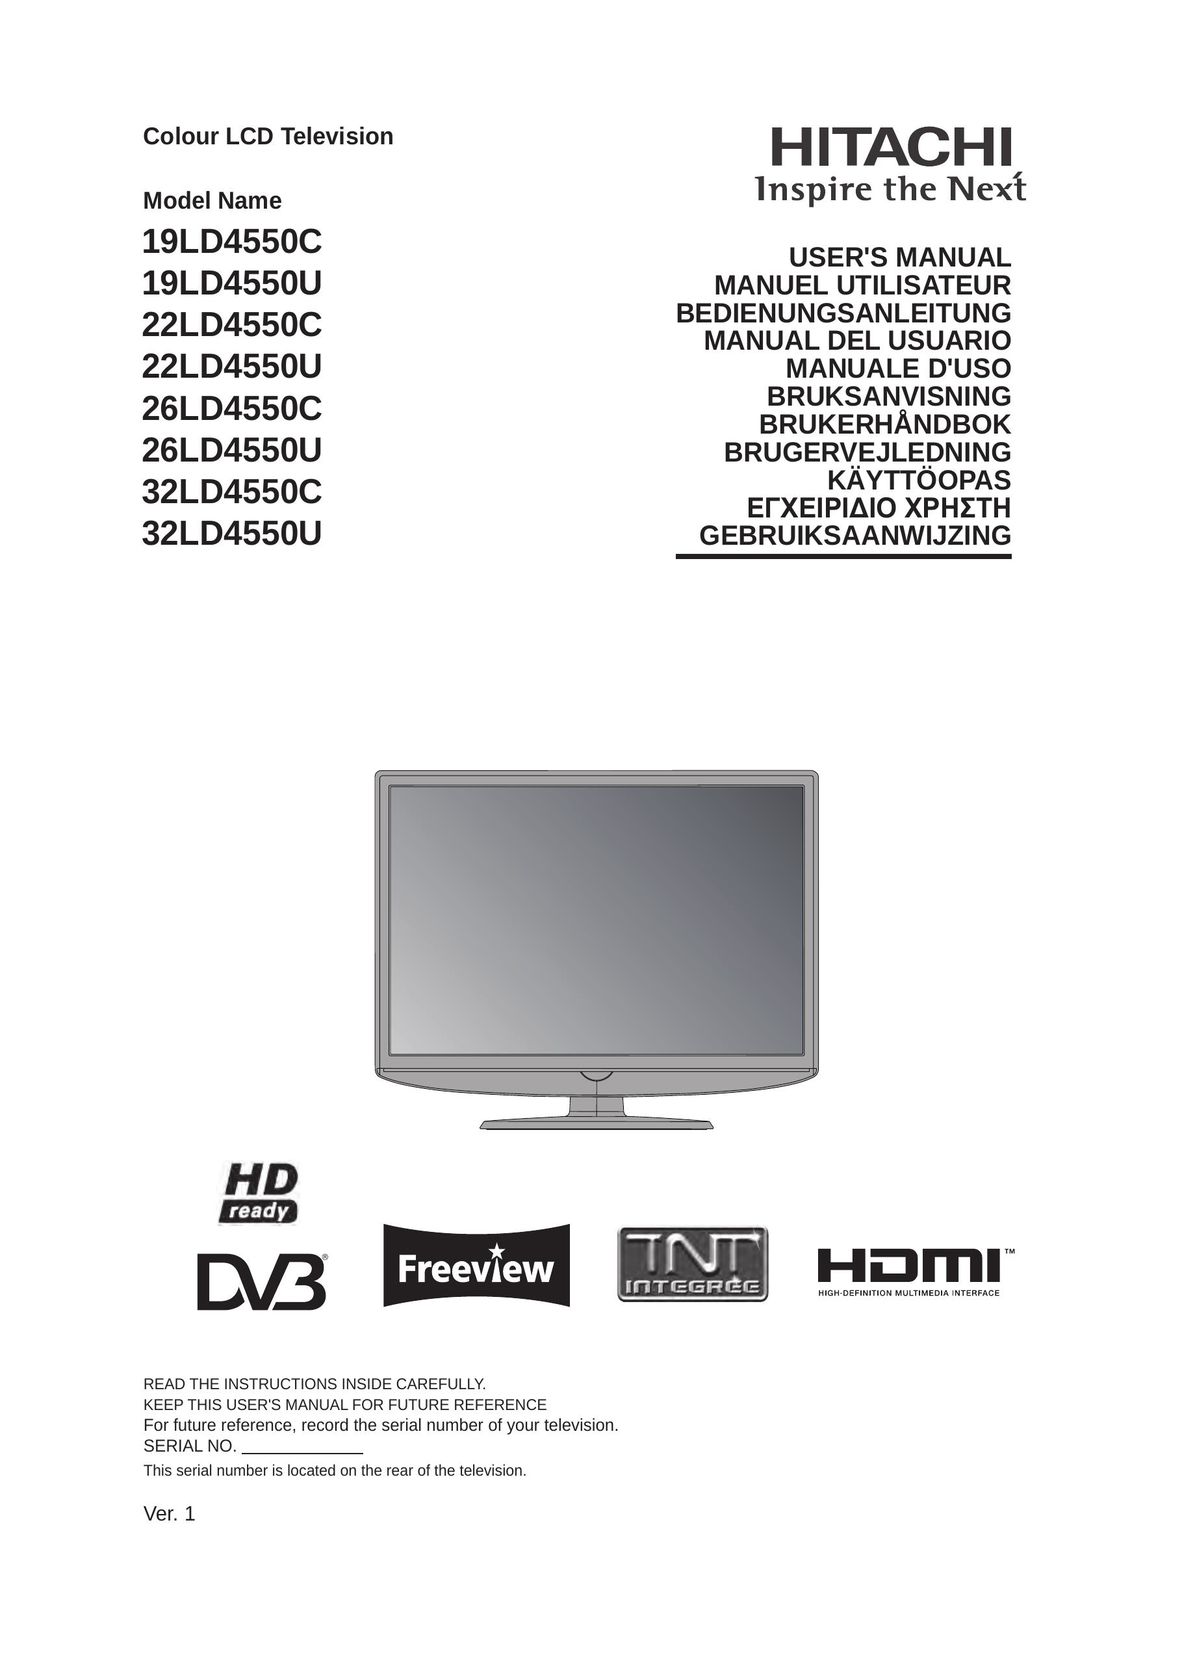 Hitachi 26LD4550U Flat Panel Television User Manual